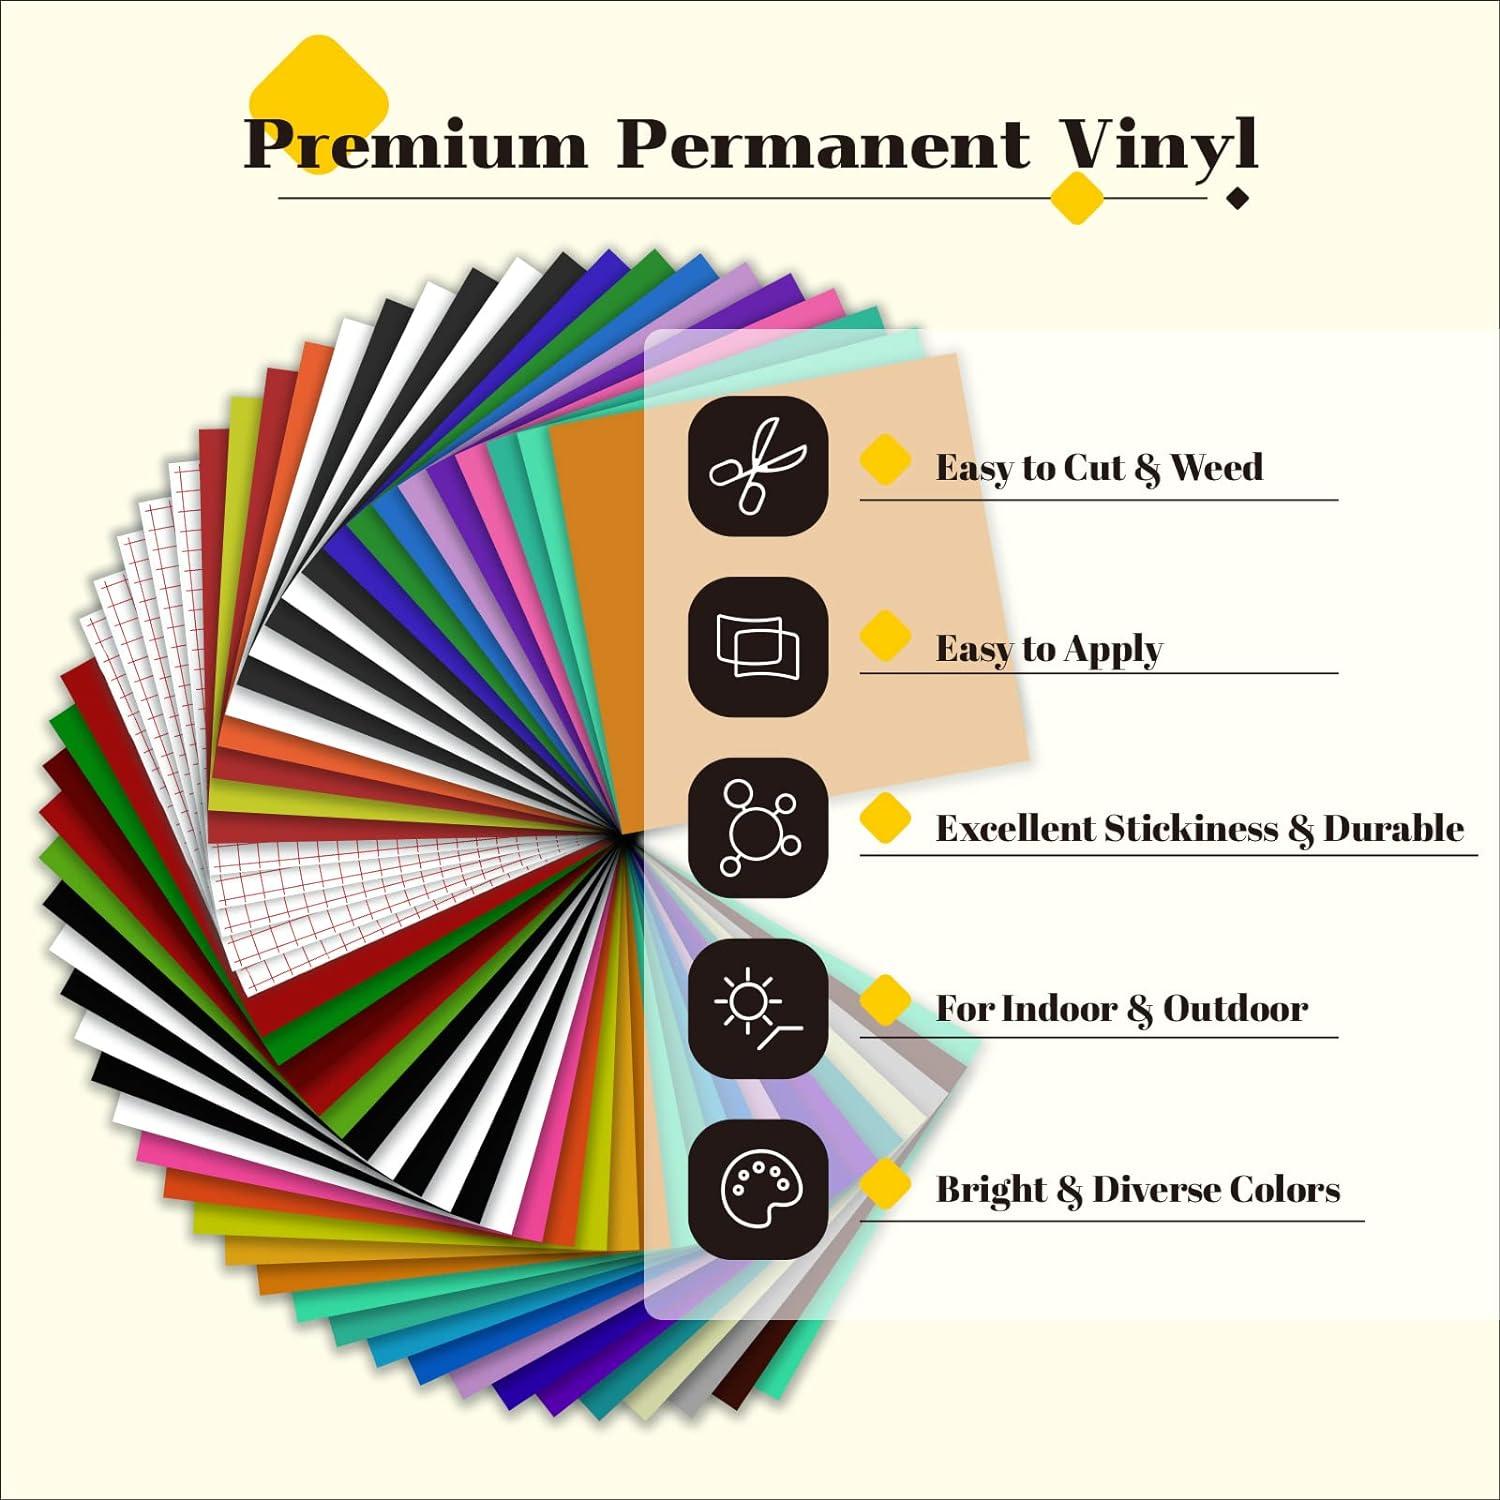 HTVRONT Permanent Vinyl Roll with Transfer Tape, 12 x 14FT Black & White Adhesive  Vinyl for Cricut, Silhouette - 2 Rolls Matte